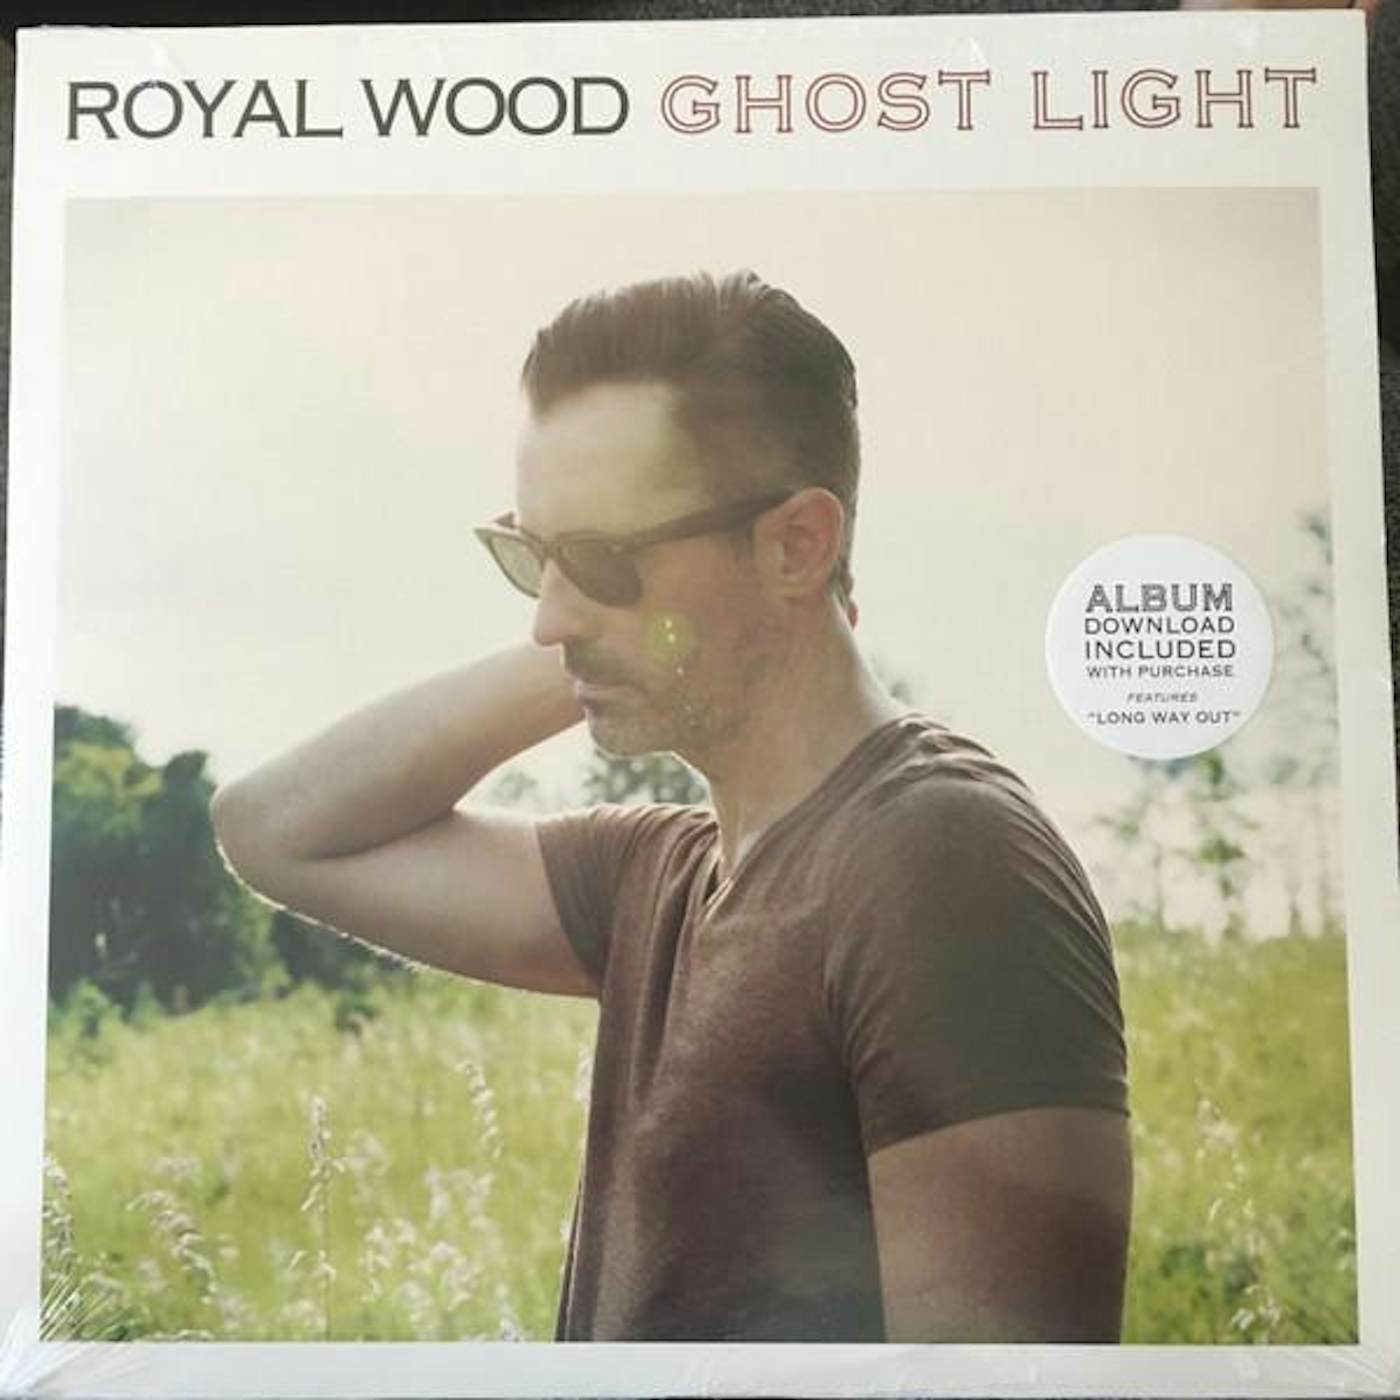 Royal Wood Ghost Light Vinyl Record